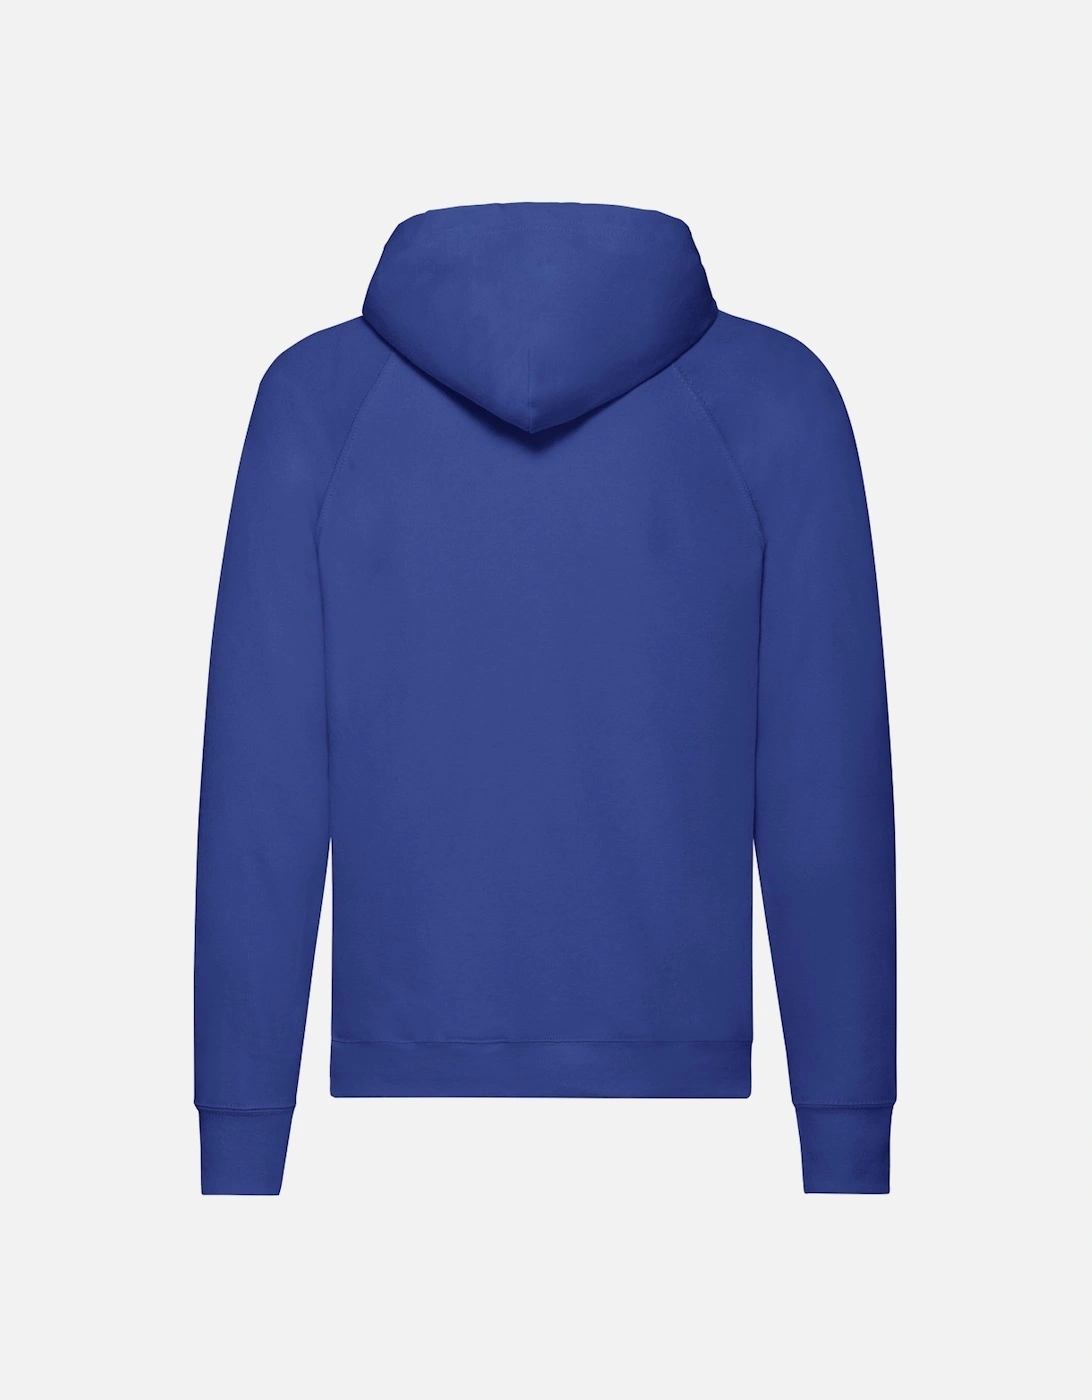 Unisex Adult Lightweight Hooded Sweatshirt